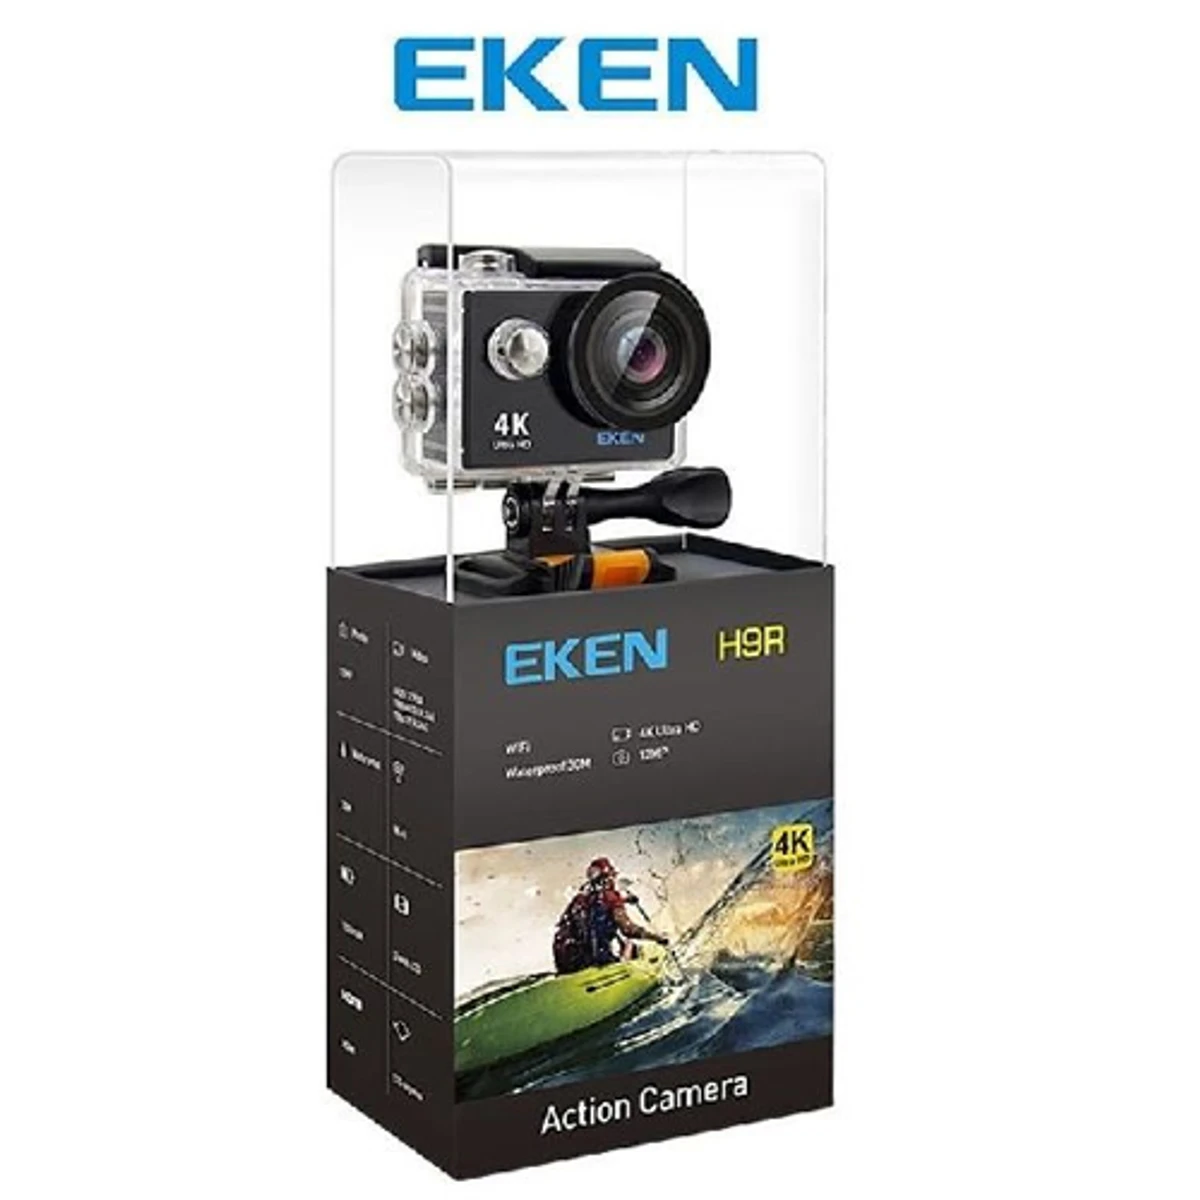 EKEN H9R Action Camera + All Accessories